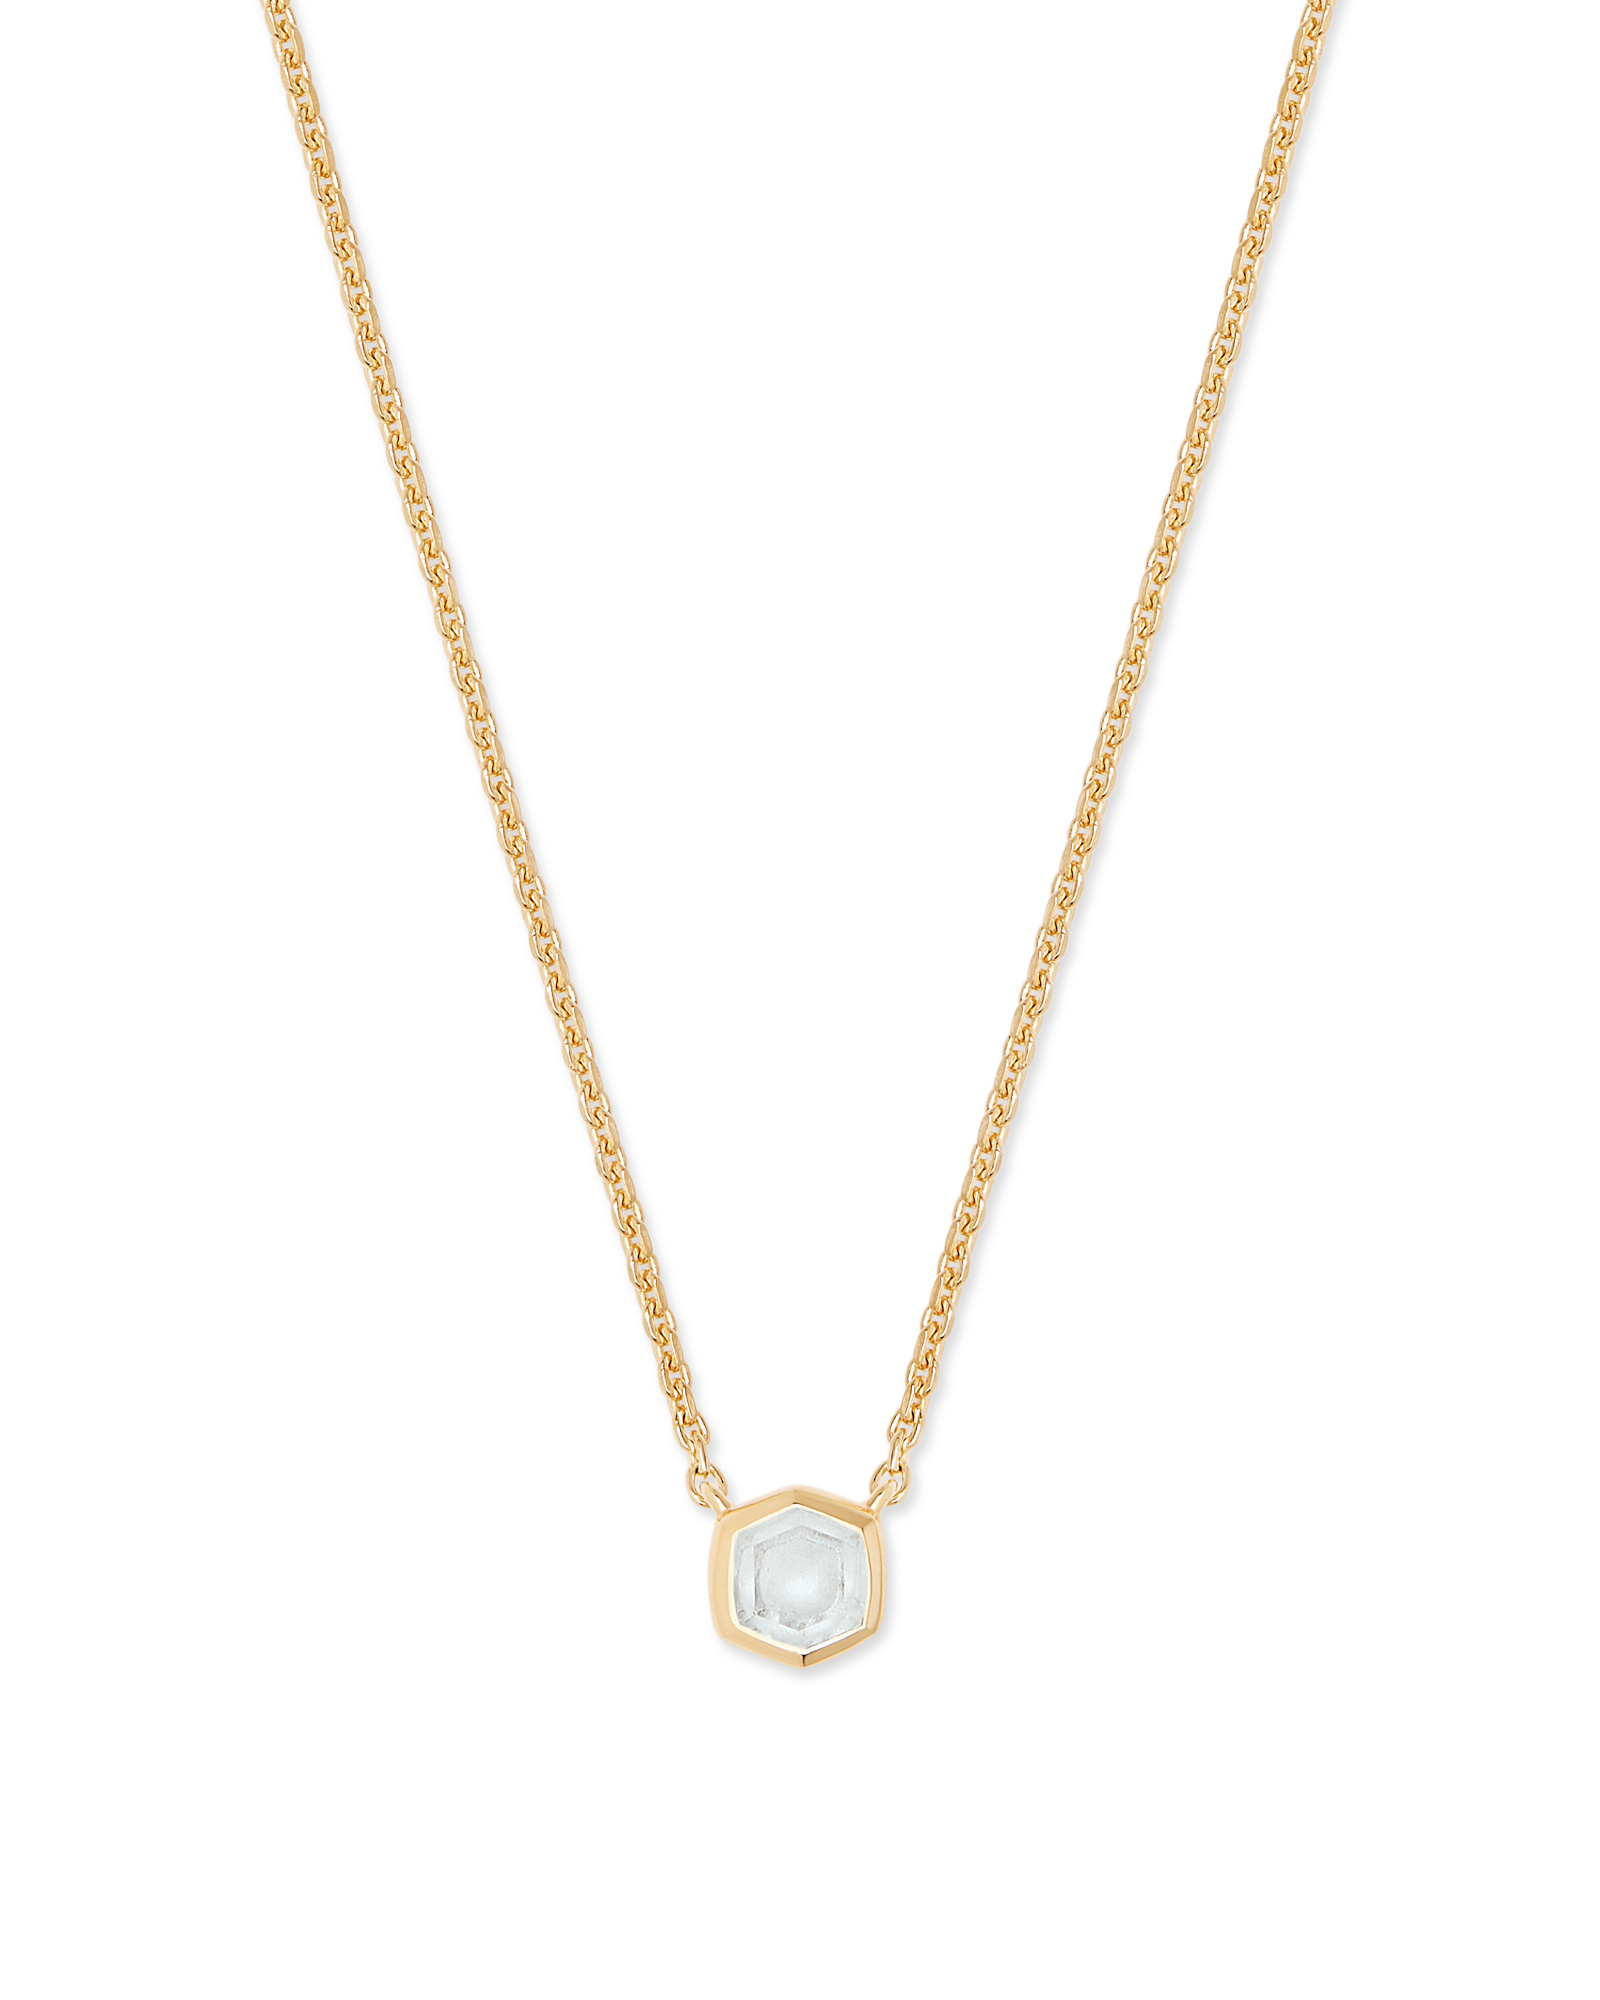 Davie 18k Gold Vermeil Pendant Necklace in Rock Crystal | Kendra Scott